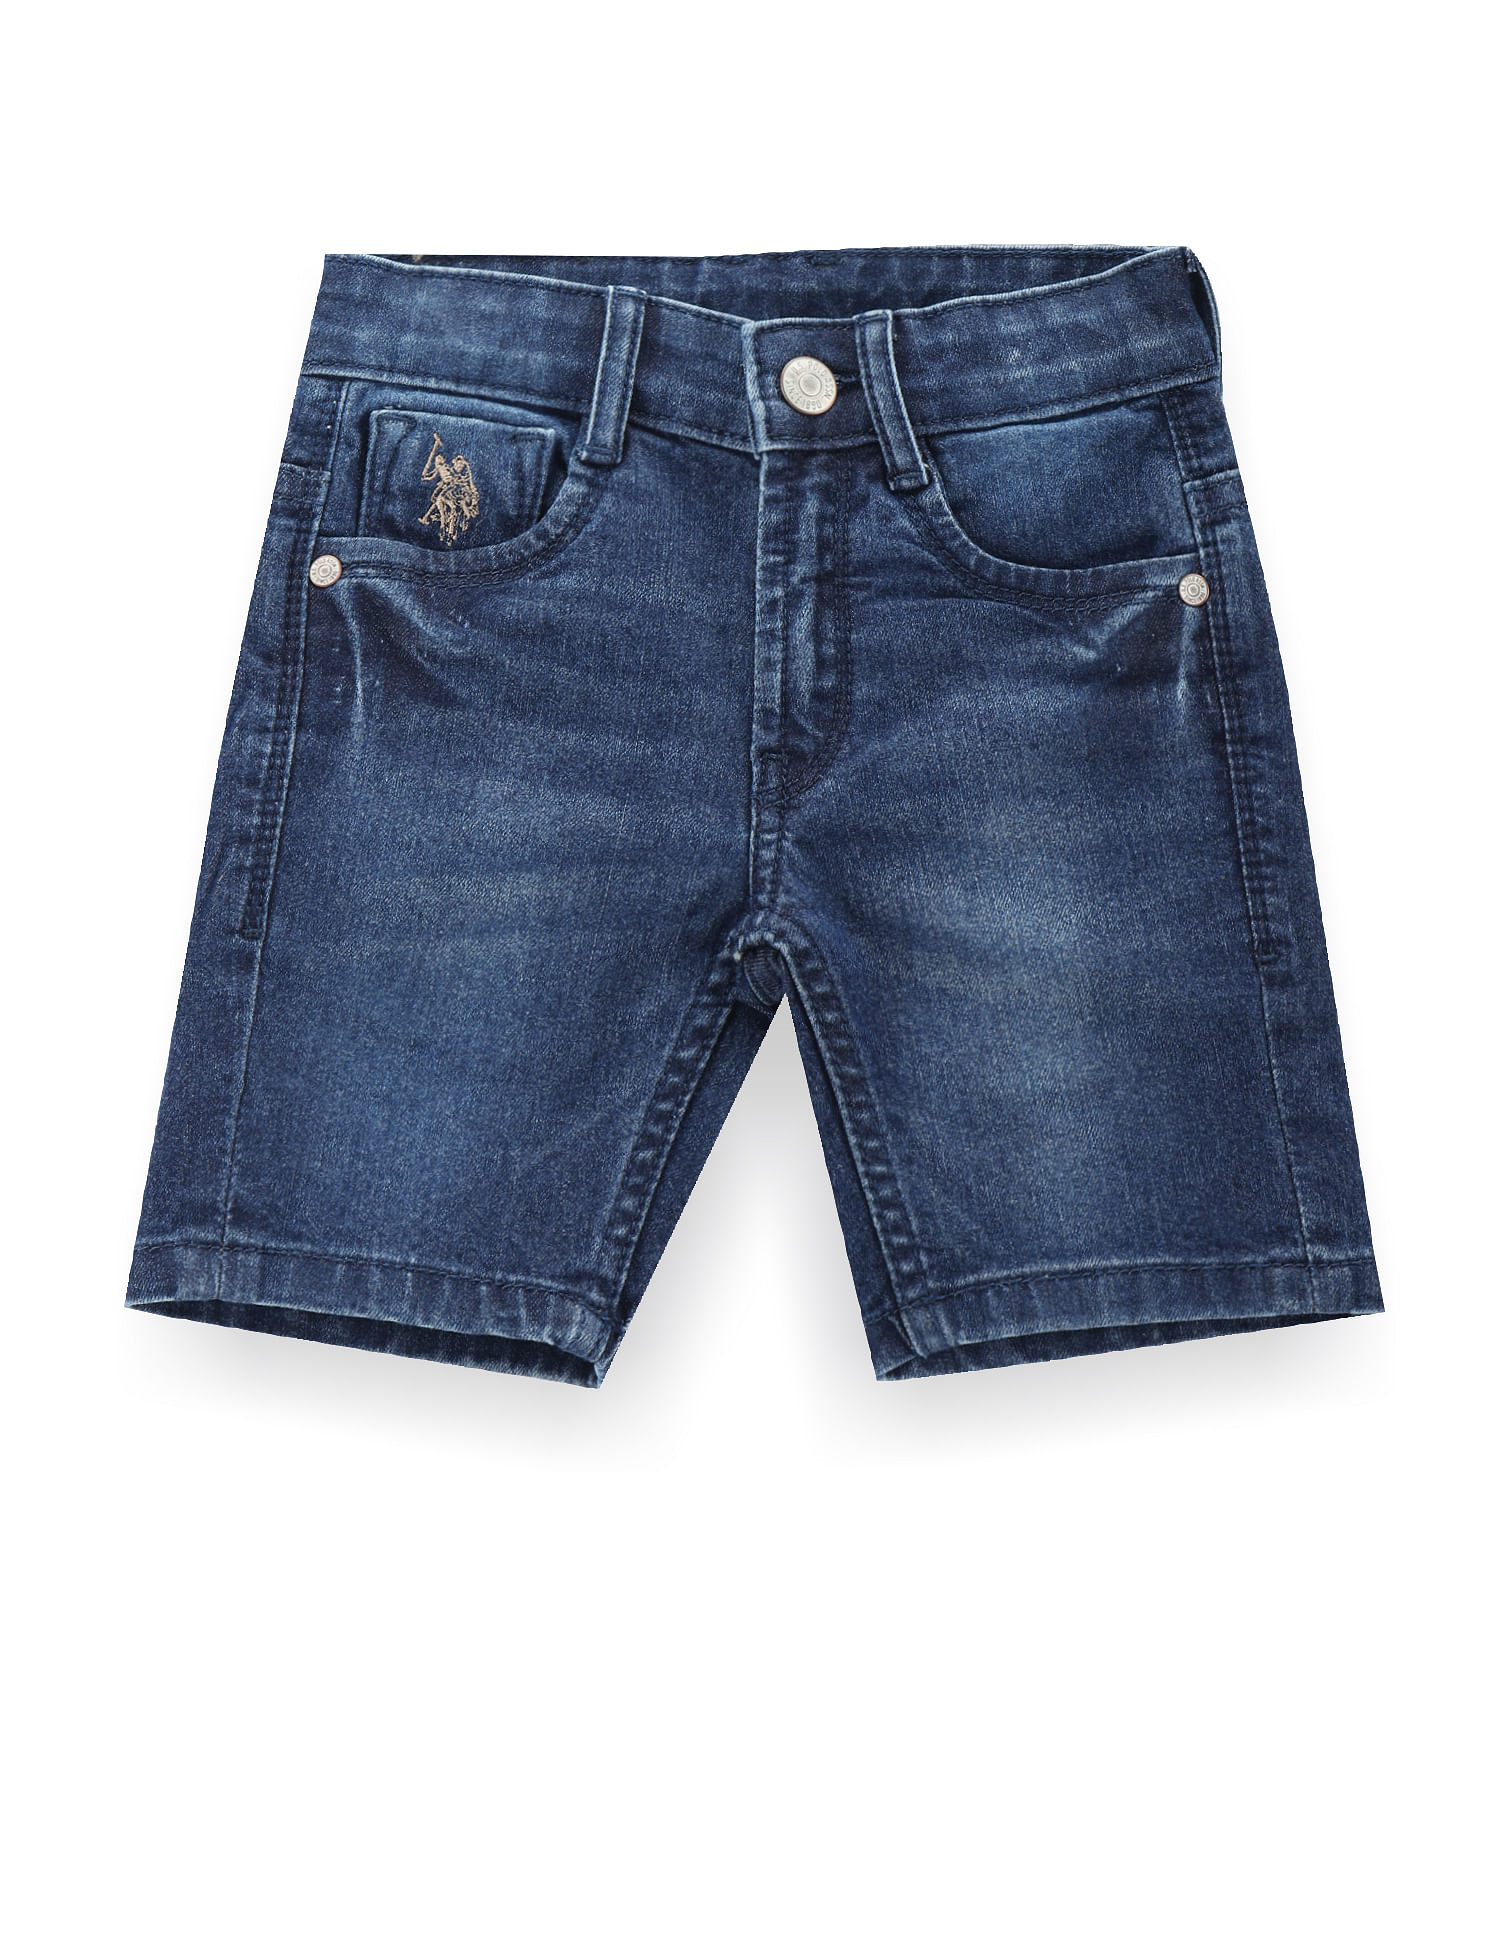 Buy U.S. Polo Assn. Kids Boys Dark Wash Denim Shorts - NNNOW.com